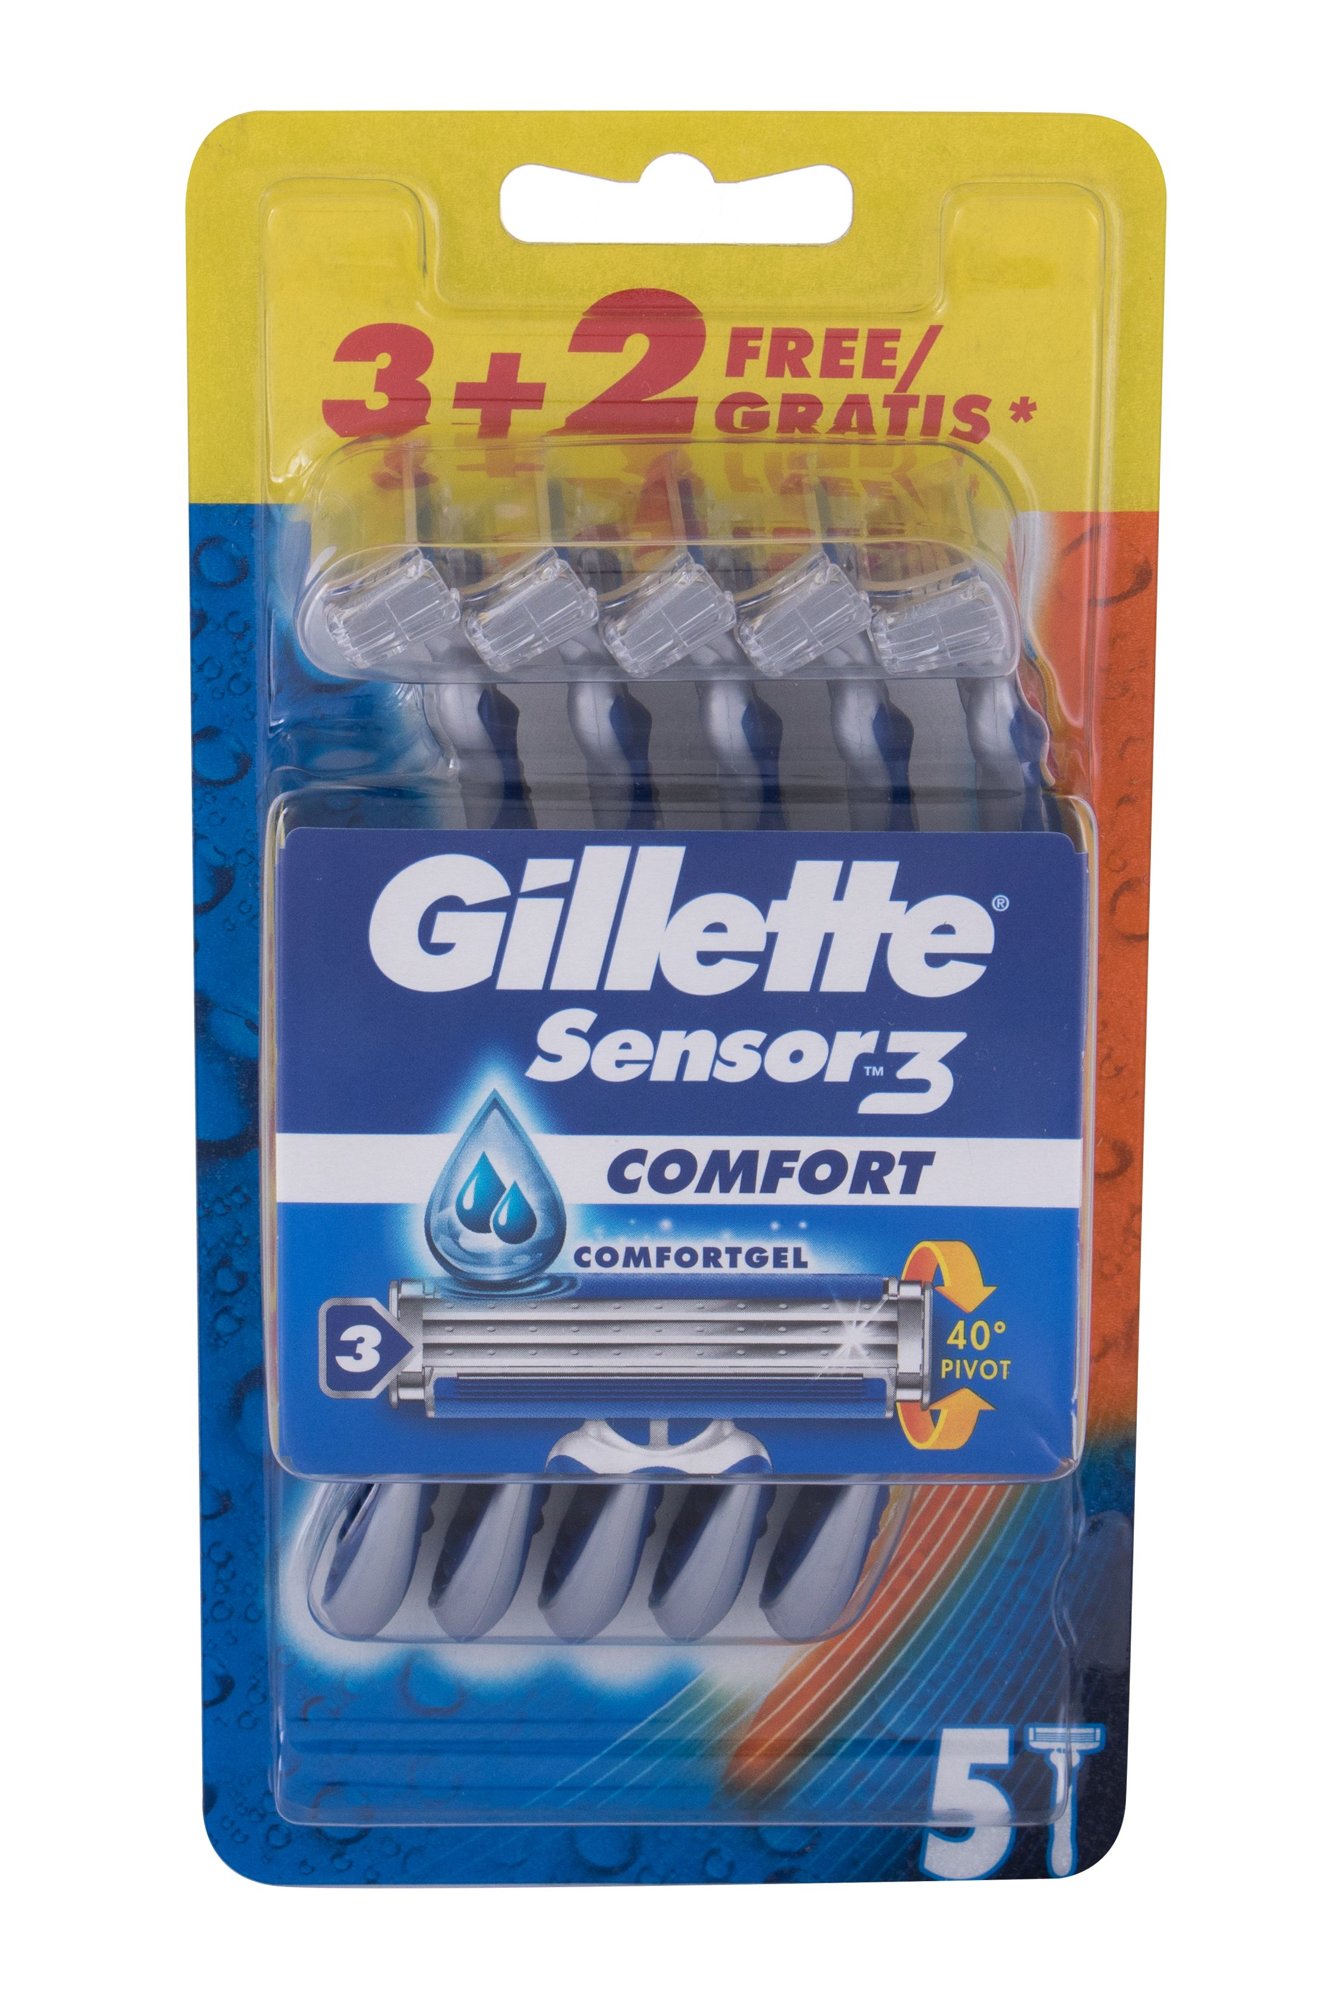 Gillette Sensor3 Comfort skustuvas